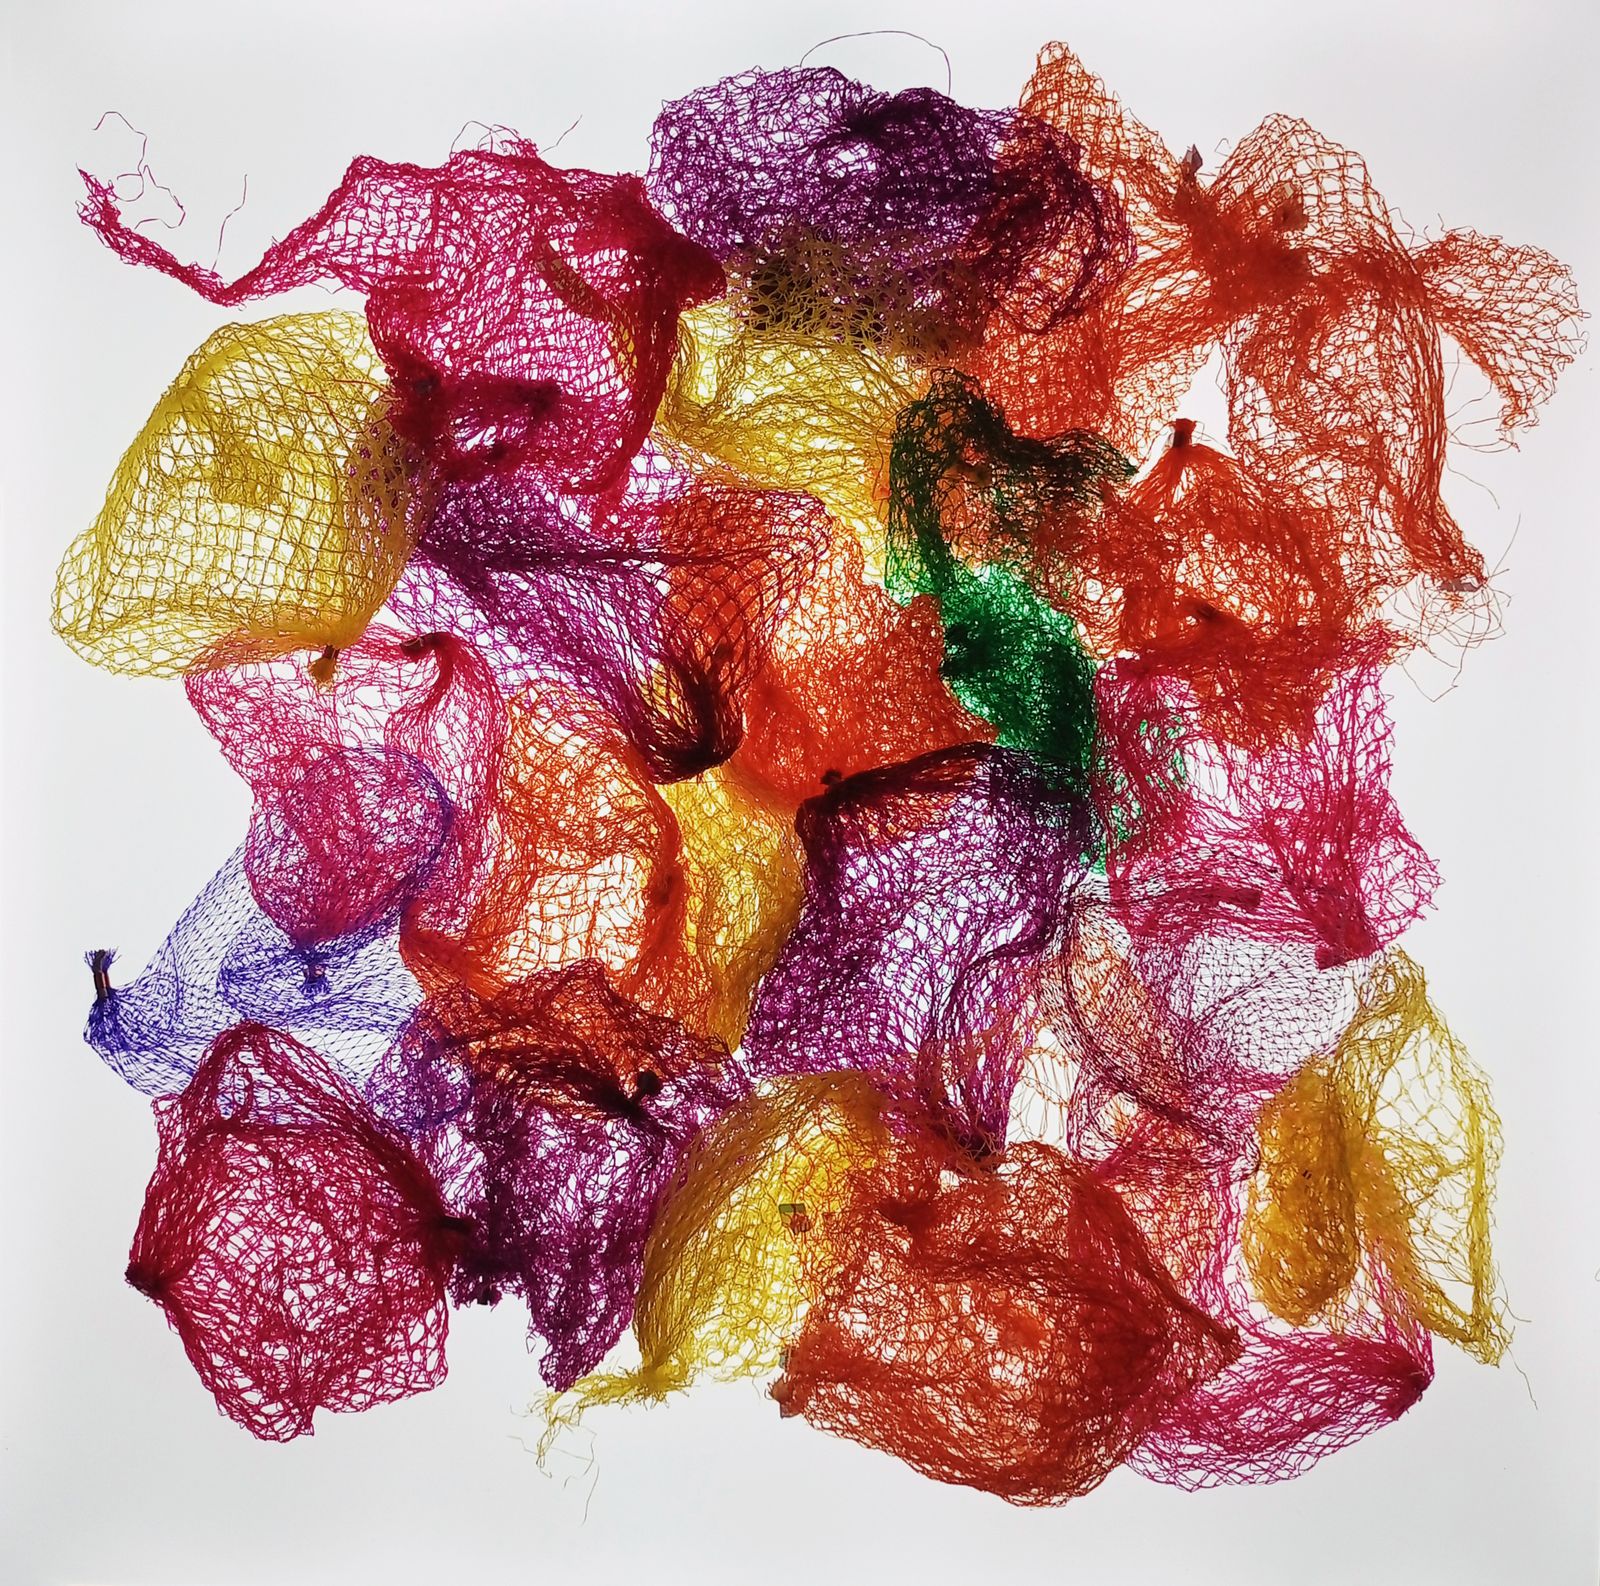 Fruit packaging nets